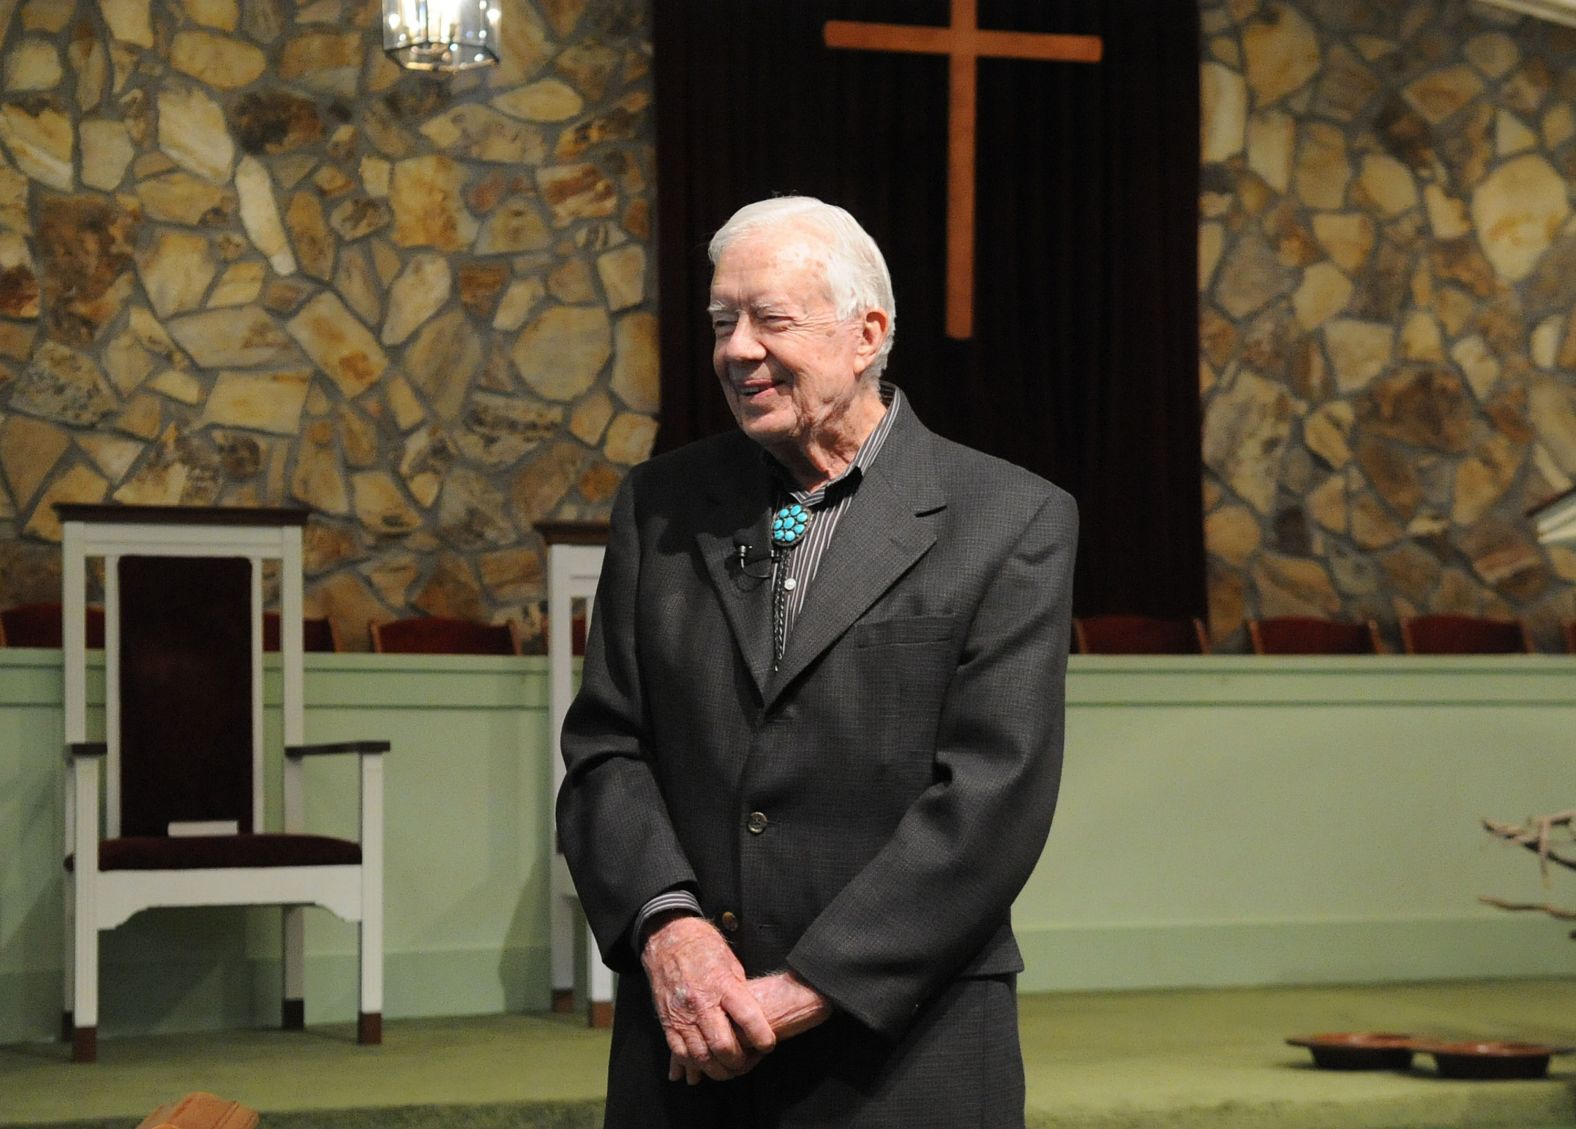 Carter teaches Sunday School on Easter at the Maranatha Baptist Church in Plains, Georgia, in 2014. Carter taught Sunday School at the church several times a year.